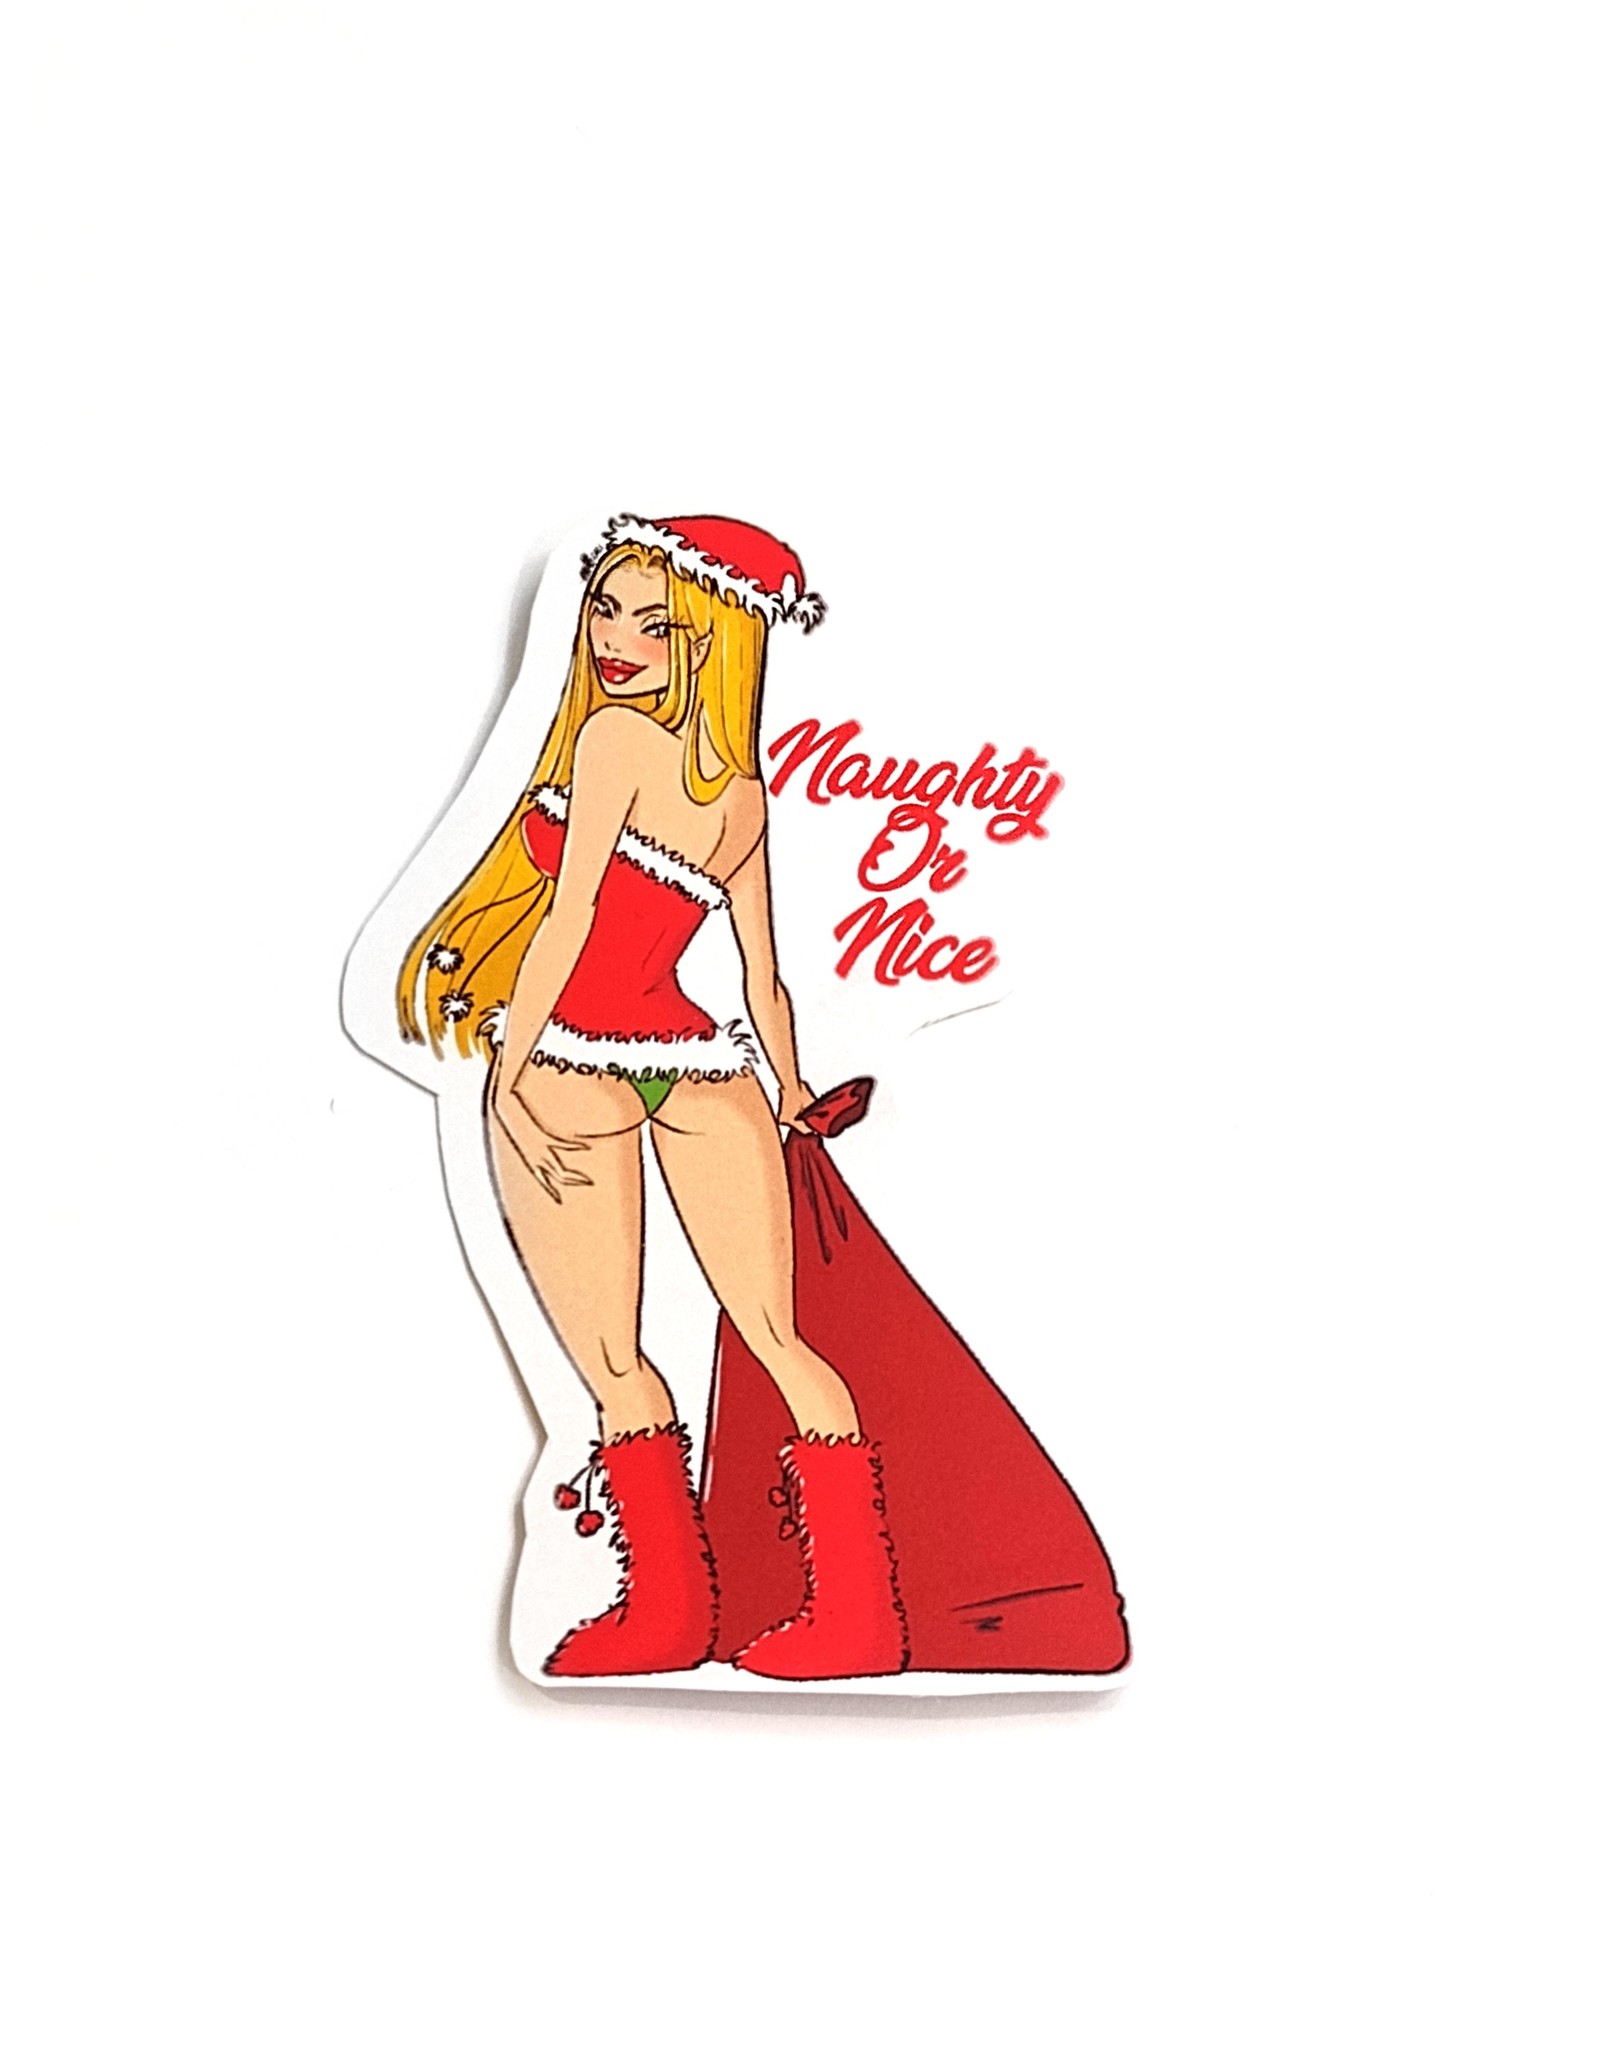 Morgan Illustrates "Naughty or Nice" sticker by Morgan Illustrates